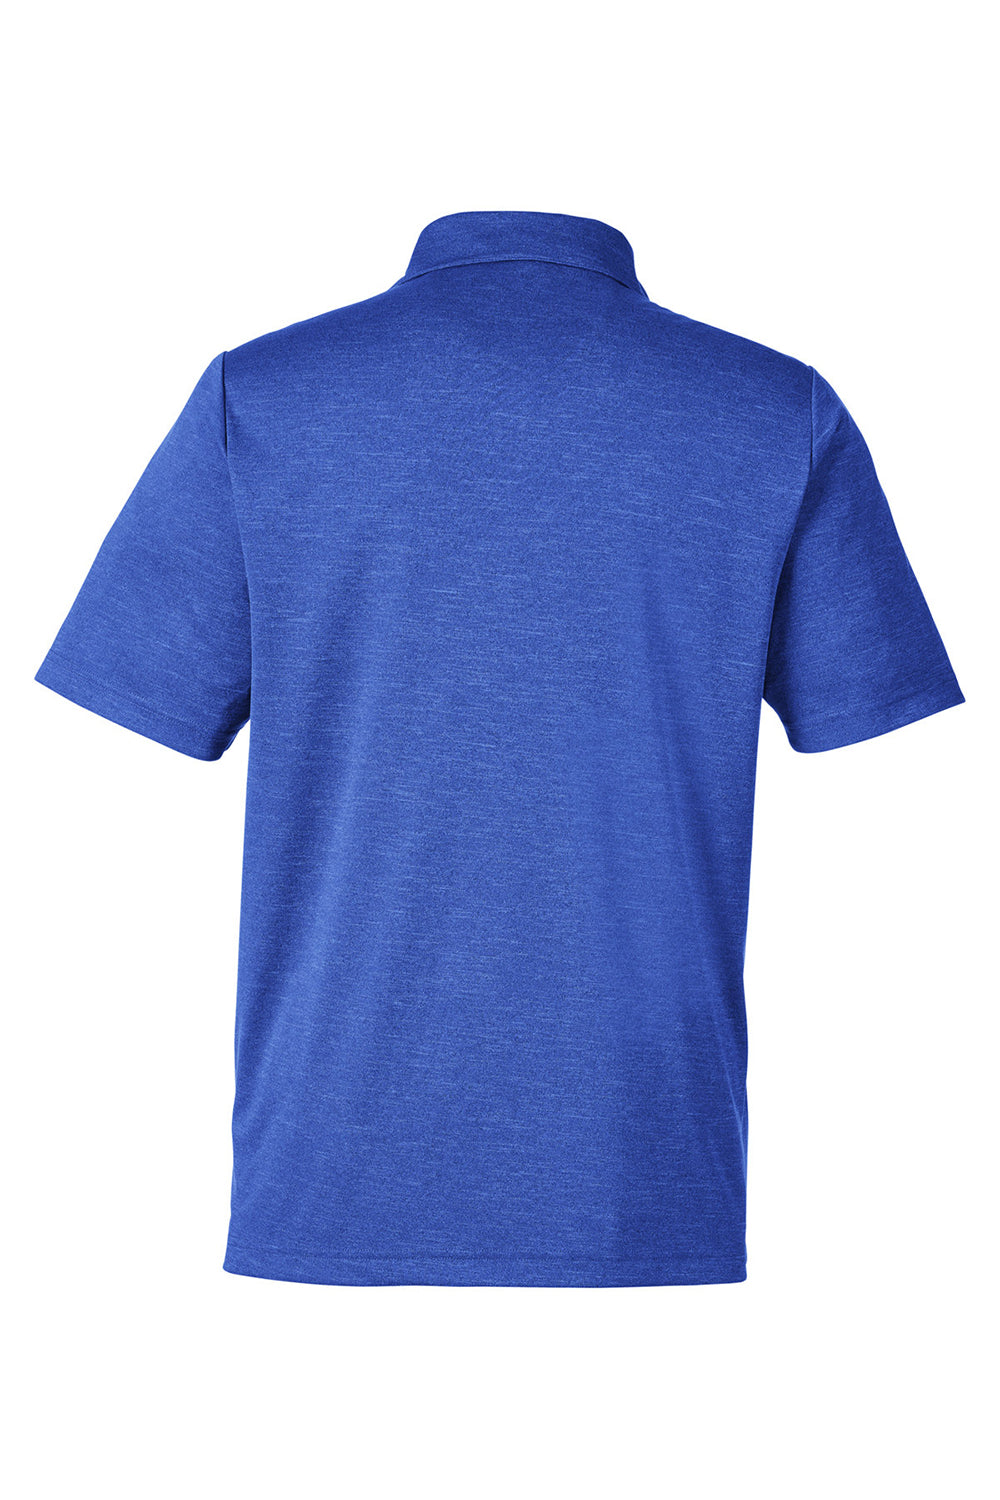 Team 365 TT51H Mens Zone Sonic Moisture Wicking Short Sleeve Polo Shirt Heather Royal Blue Flat Back